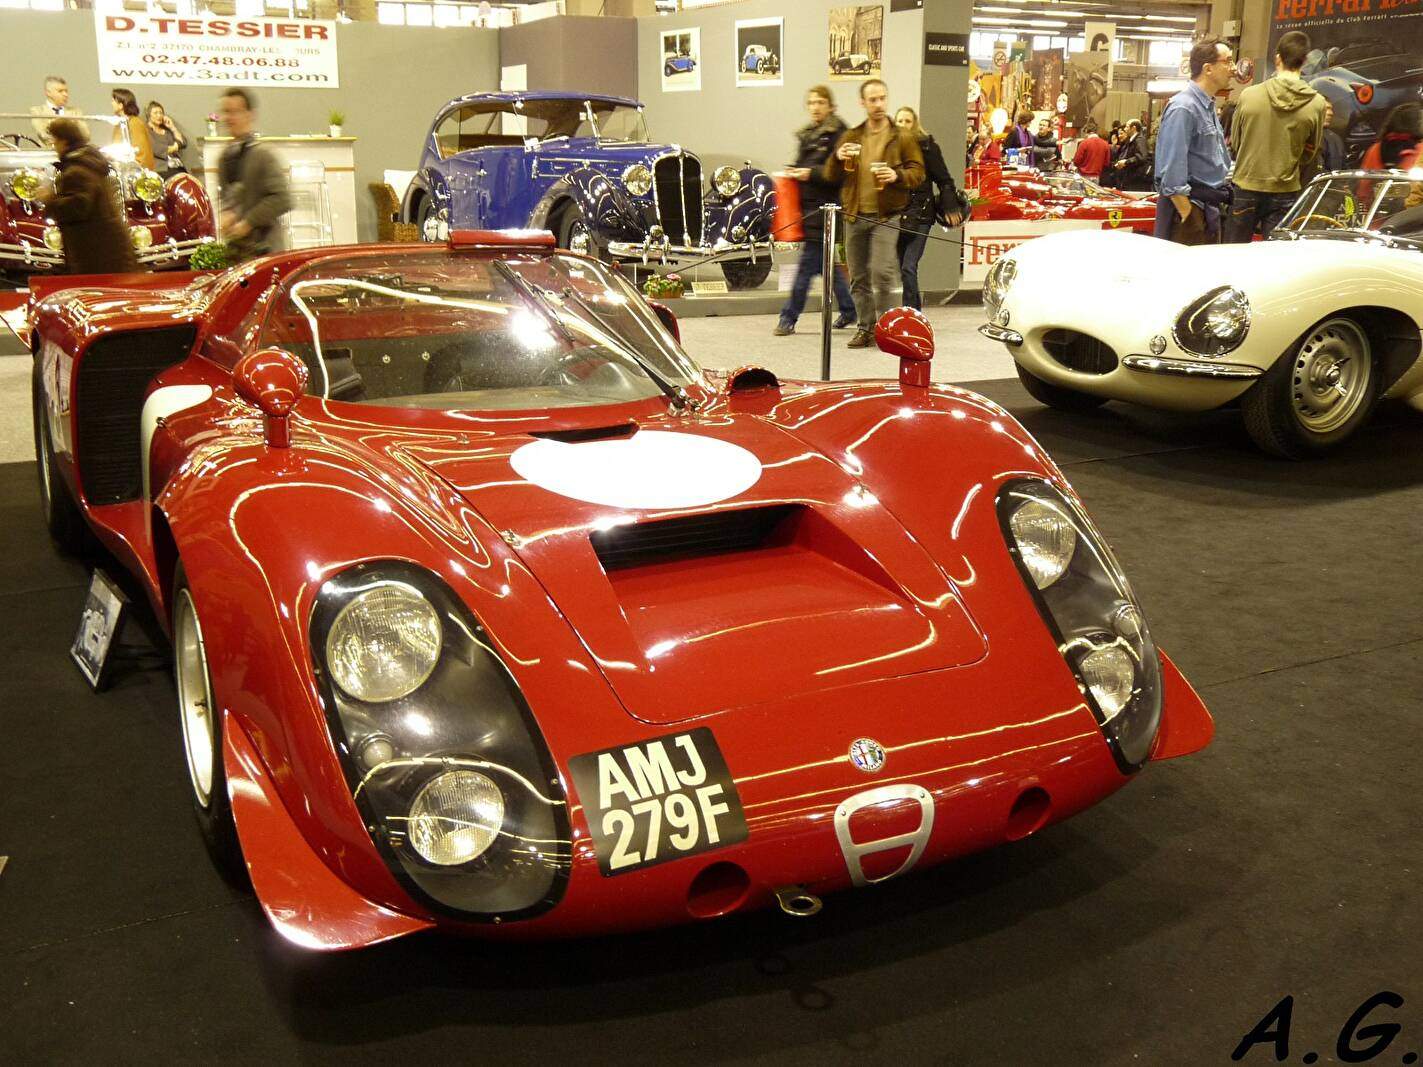 Alfa Romeo 33/2 Daytona (1968-1969),  ajouté par telkine